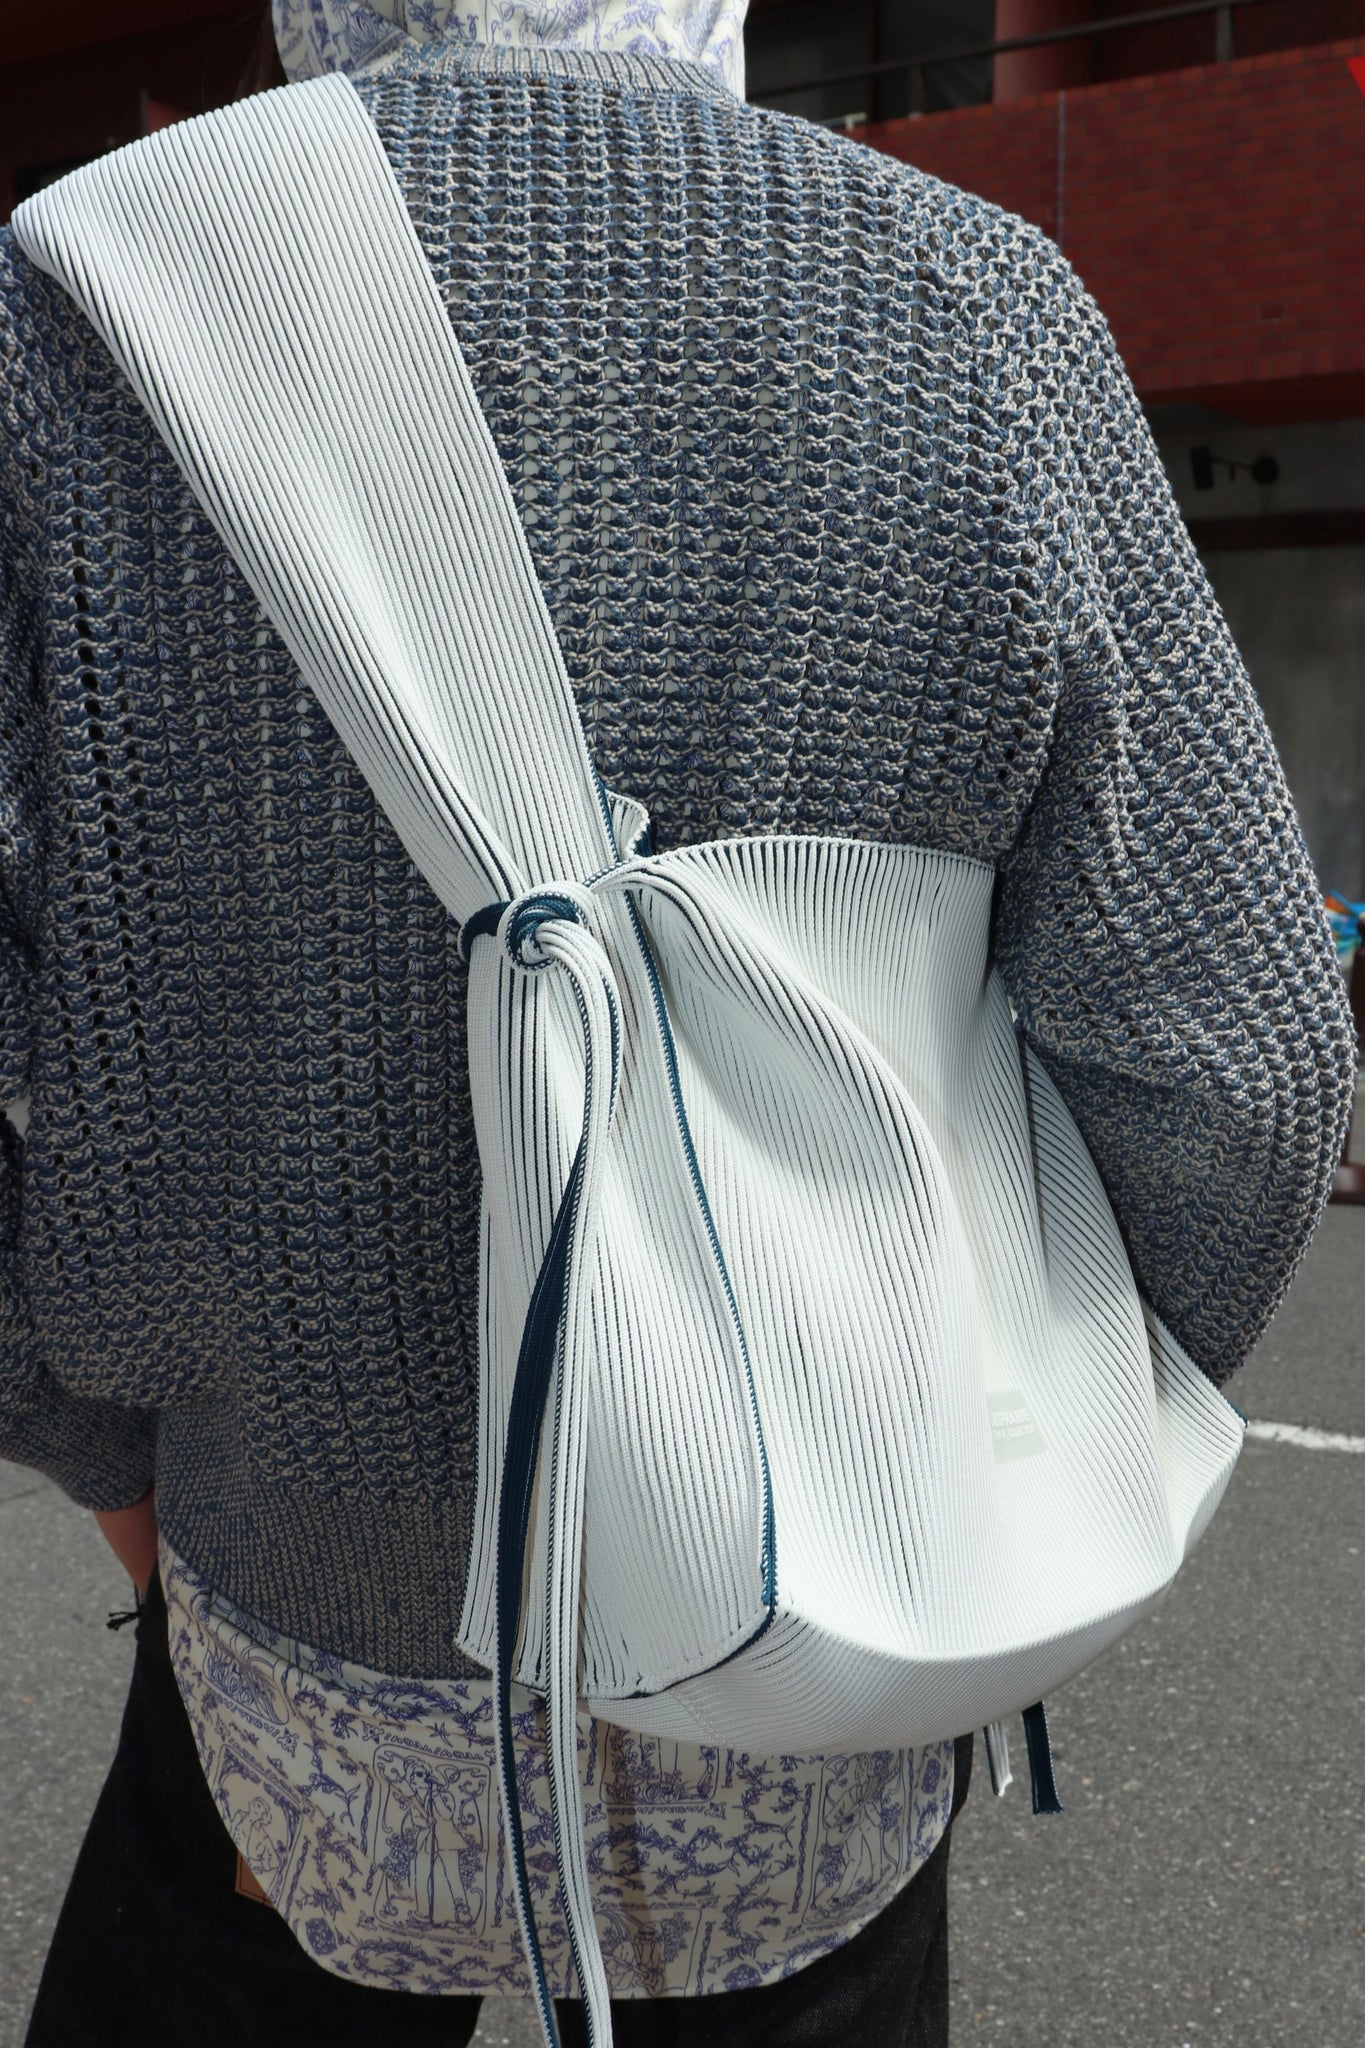 HINEMOSU BAG(OFF WHITE × D.GREEN)を使用したスタイリング画像